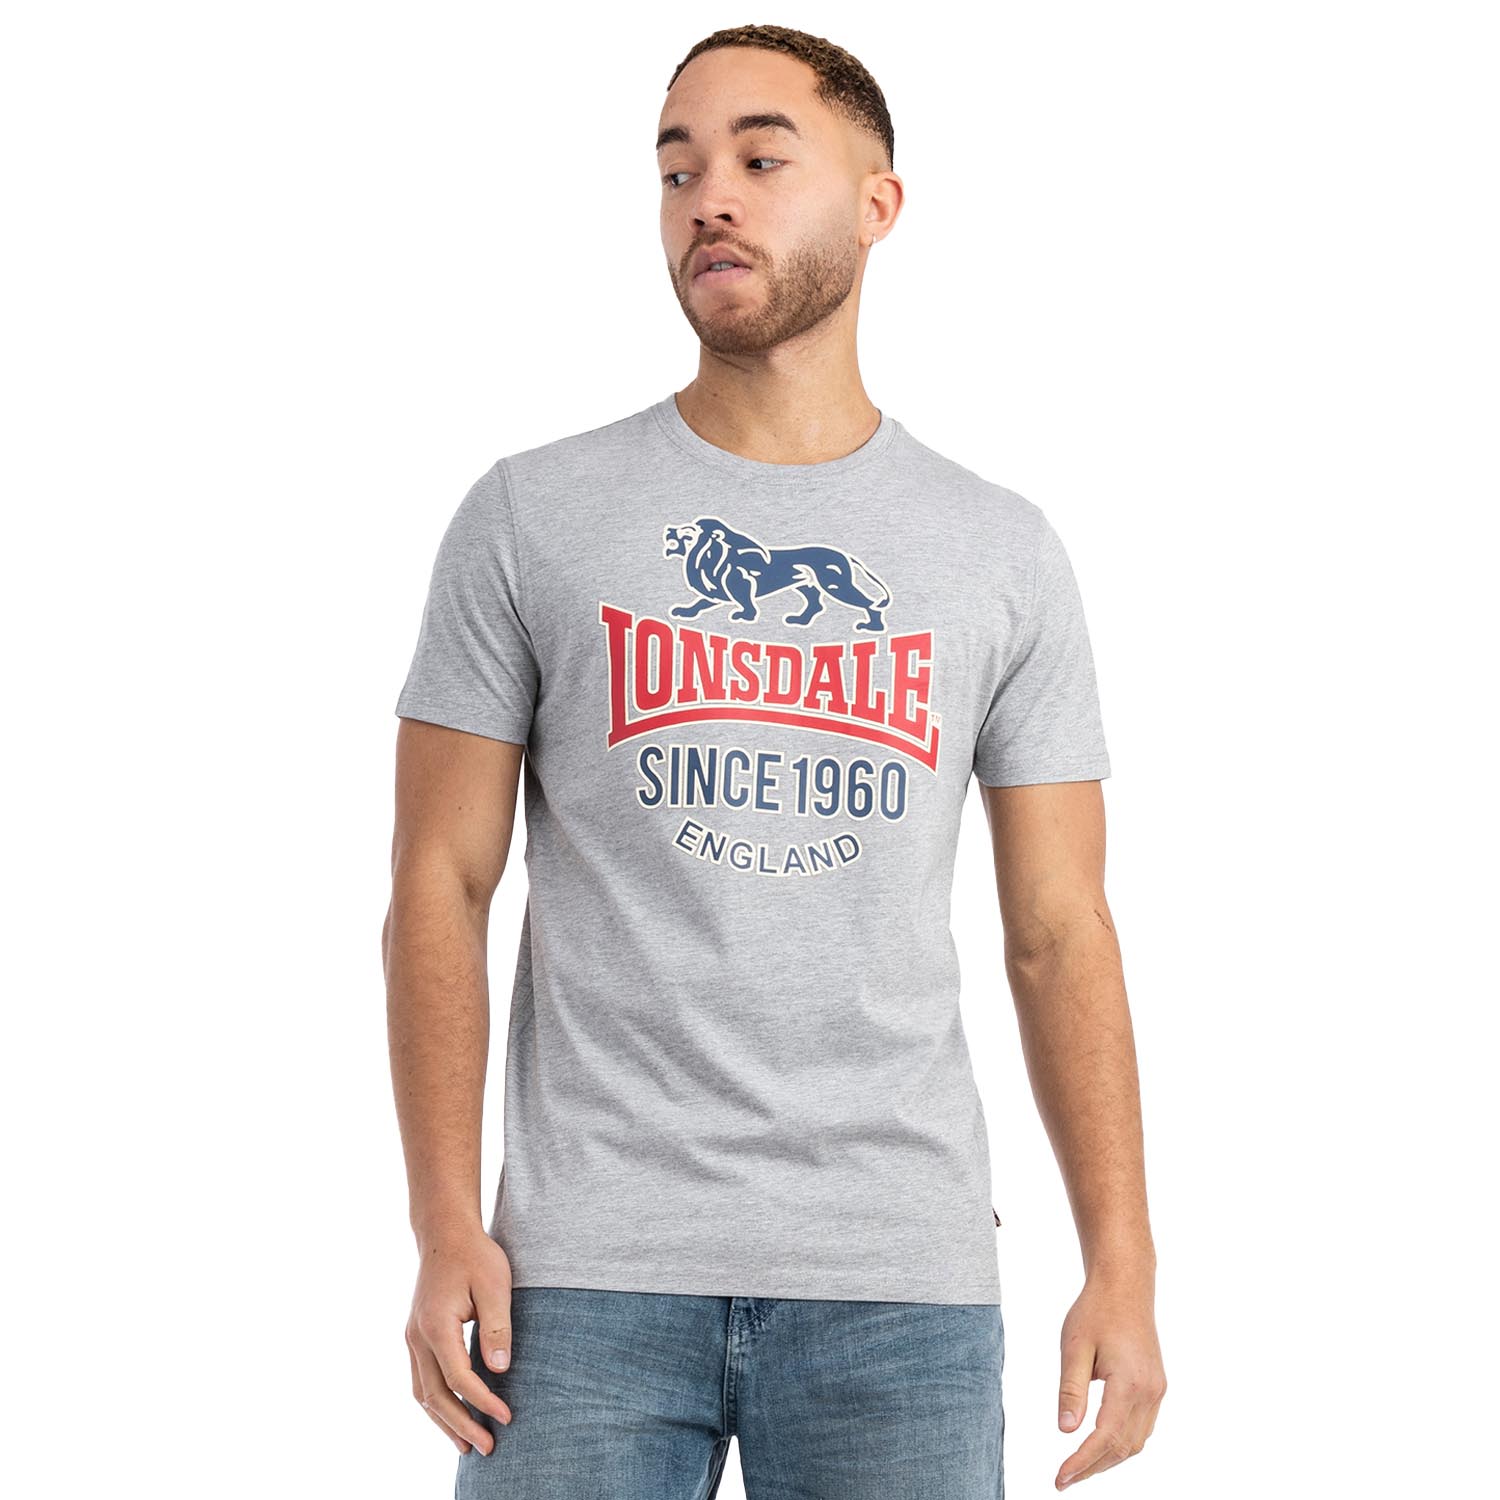 Lonsdale T-Shirt, Gonfirth, grey